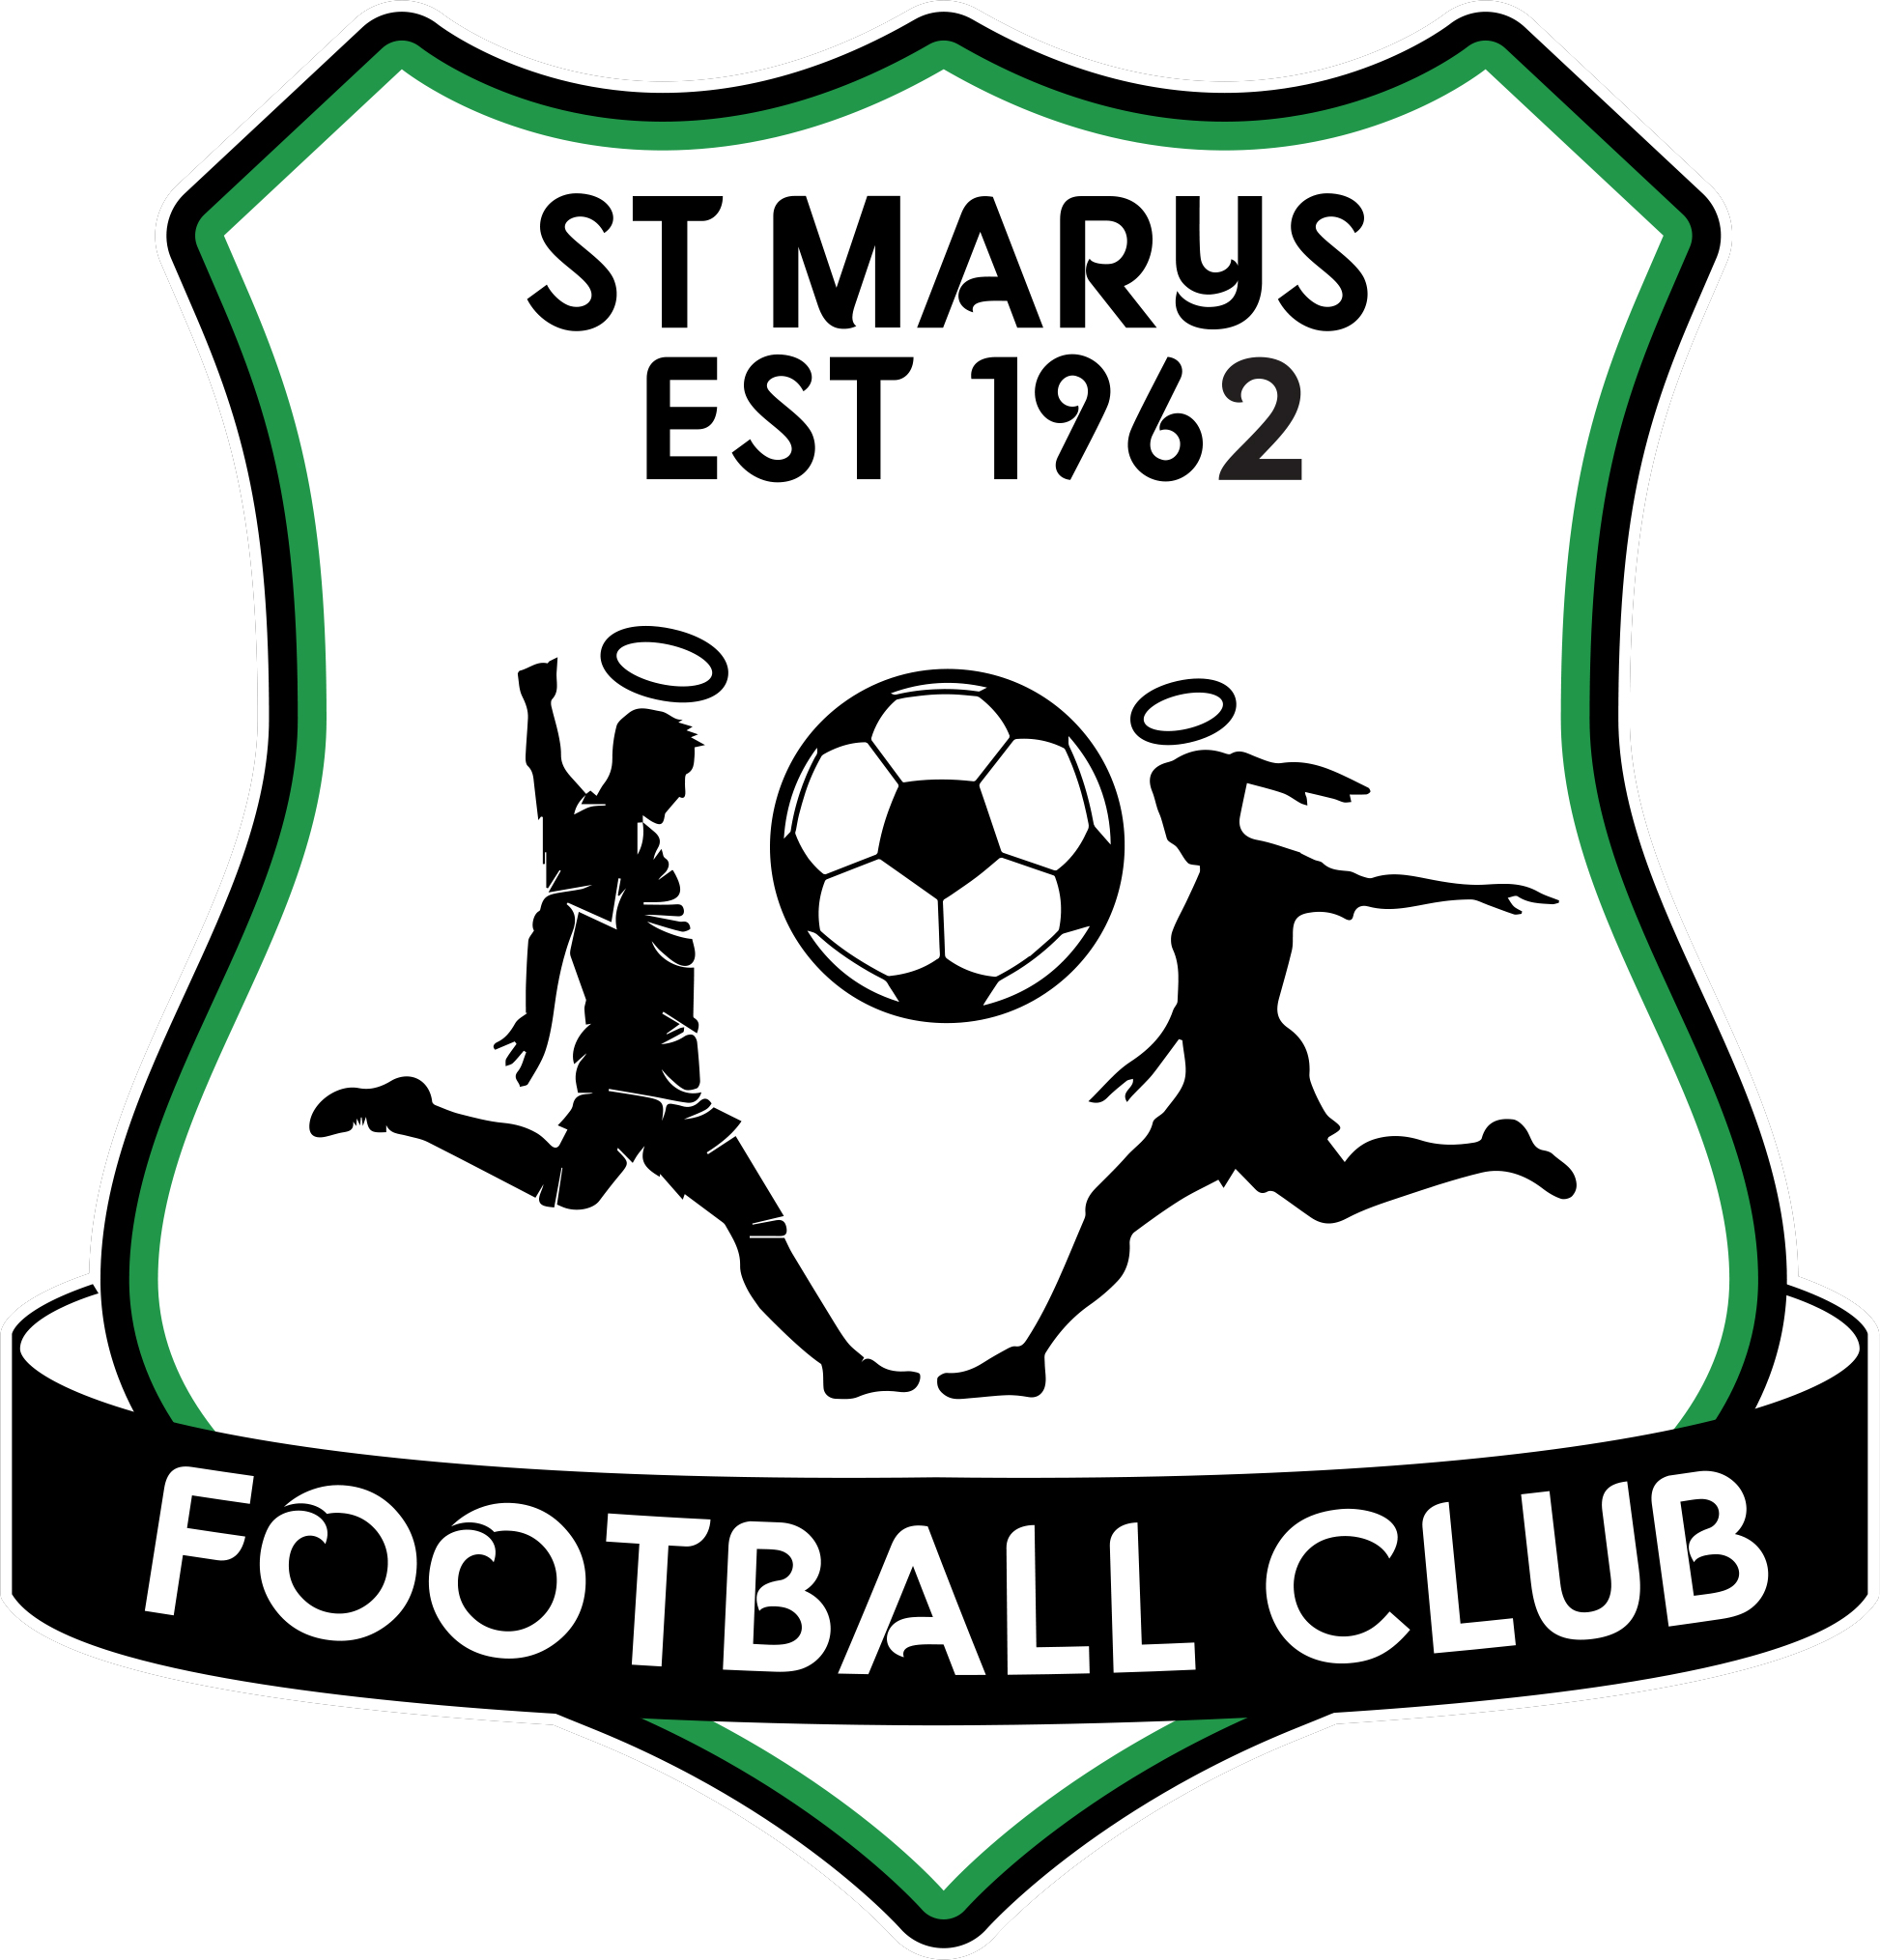 St Marys Football Club